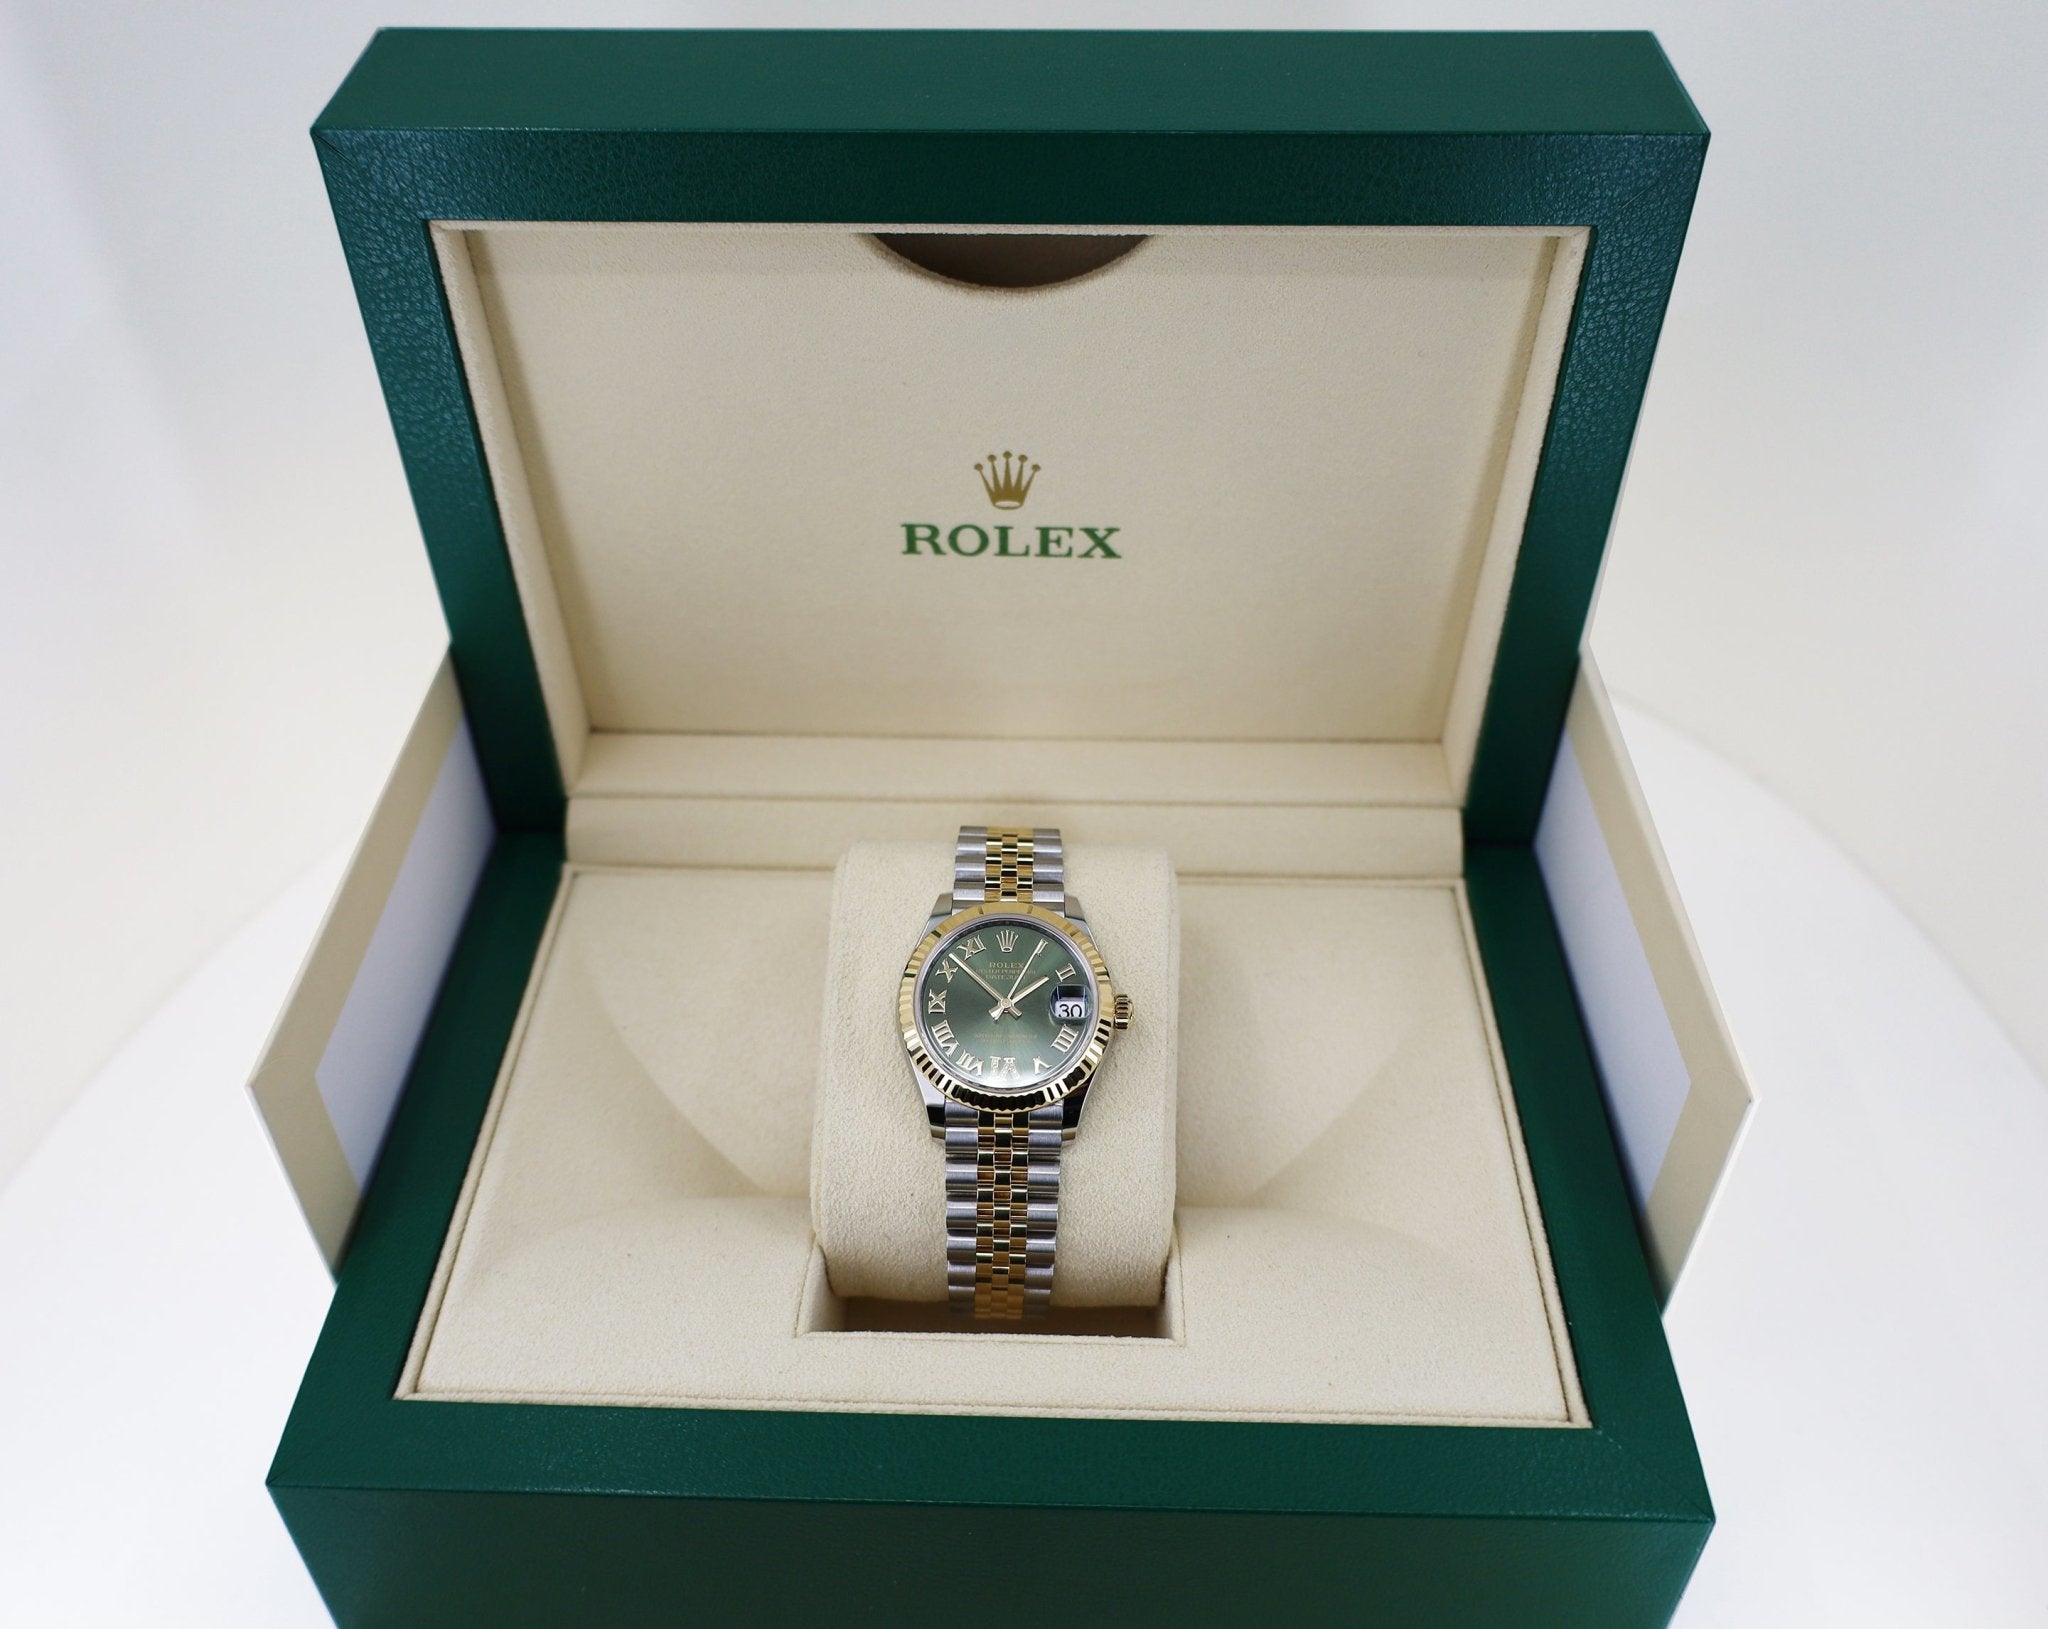 Rolex Steel and Yellow Gold Datejust 31 Watch - Fluted Bezel - Olive Green Diamond Roman Six Dial - Jubilee Bracelet - 278273 ogdr6j